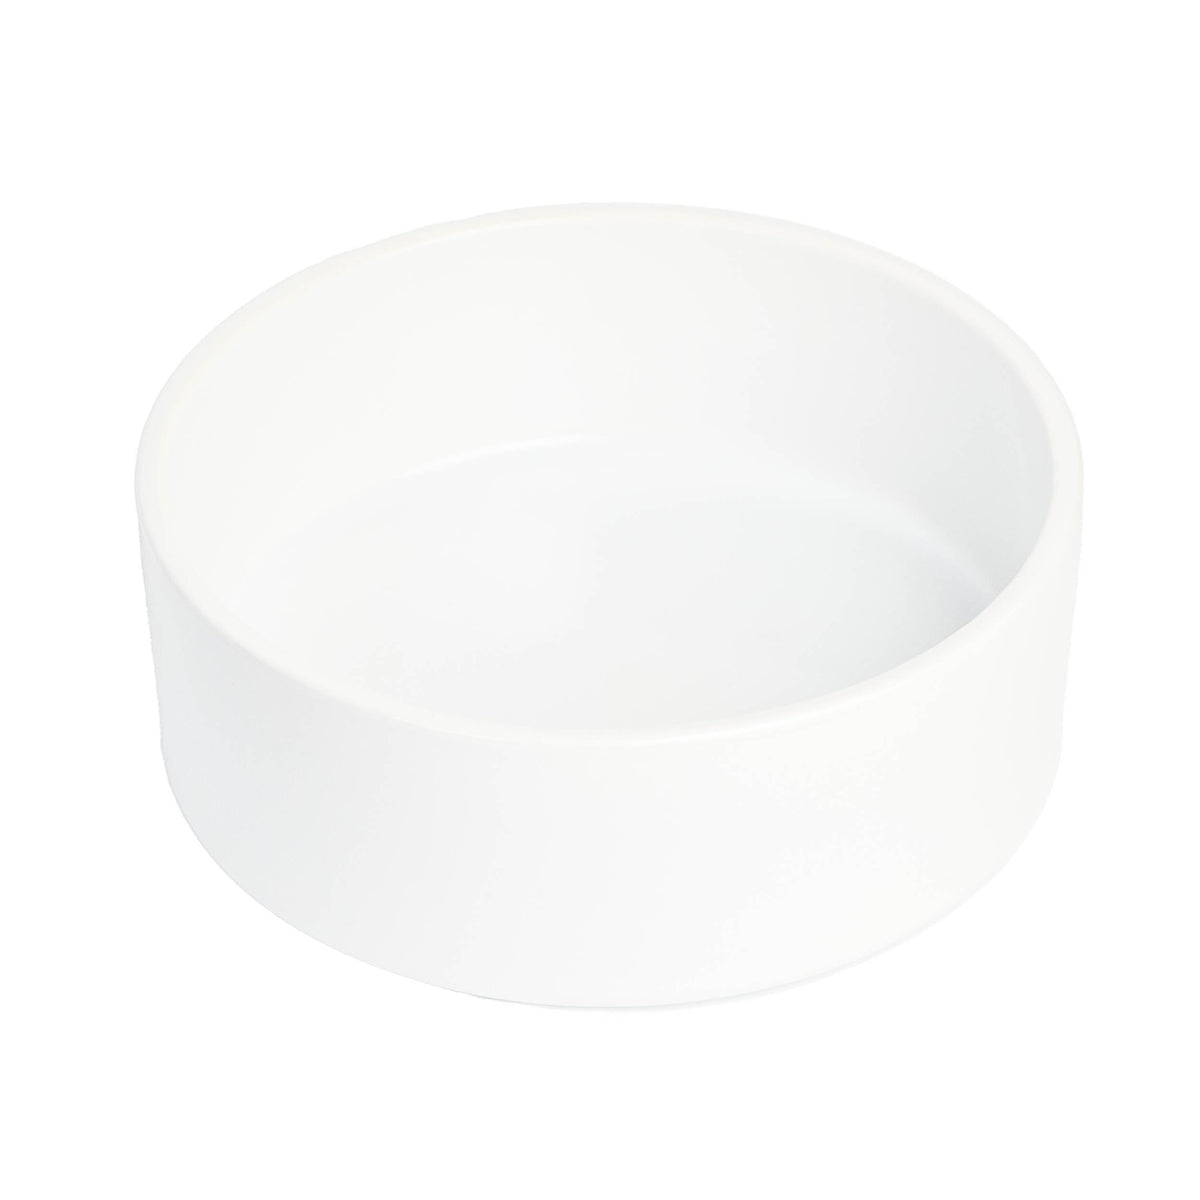 Personalised bowl for dogs / ceramic - 22oz 650ml (design 7)